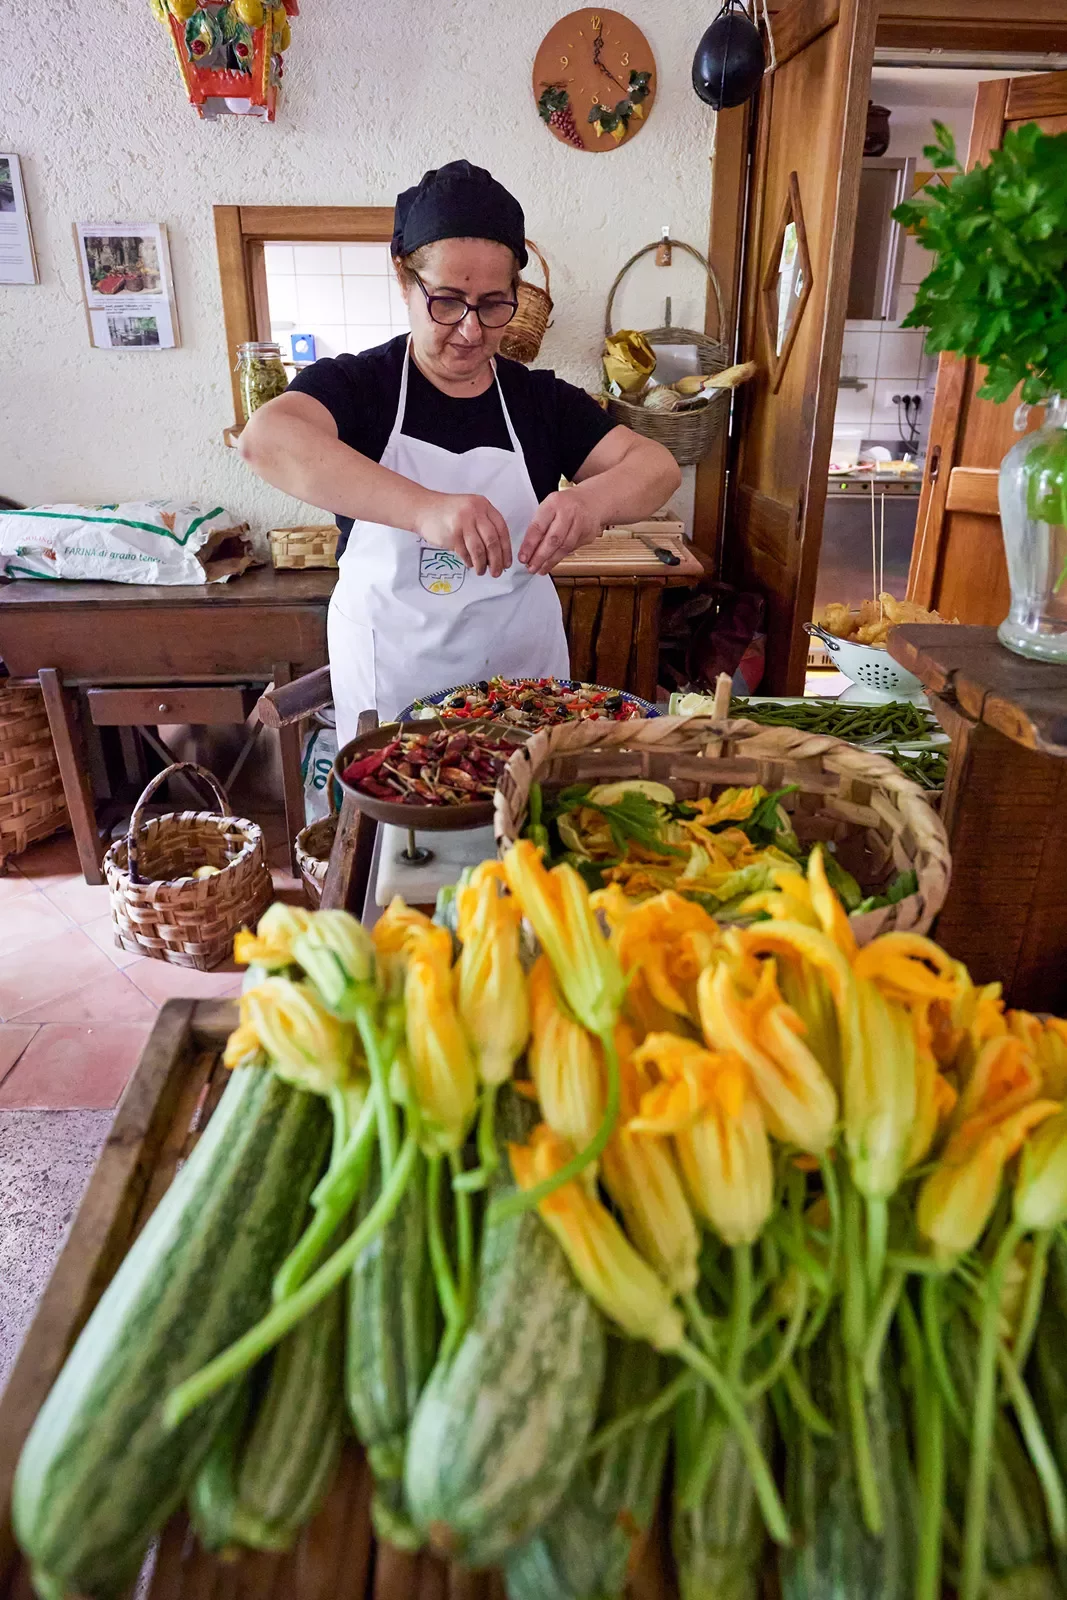 Local chef preparing food, zucchini + blossoms in foreground.